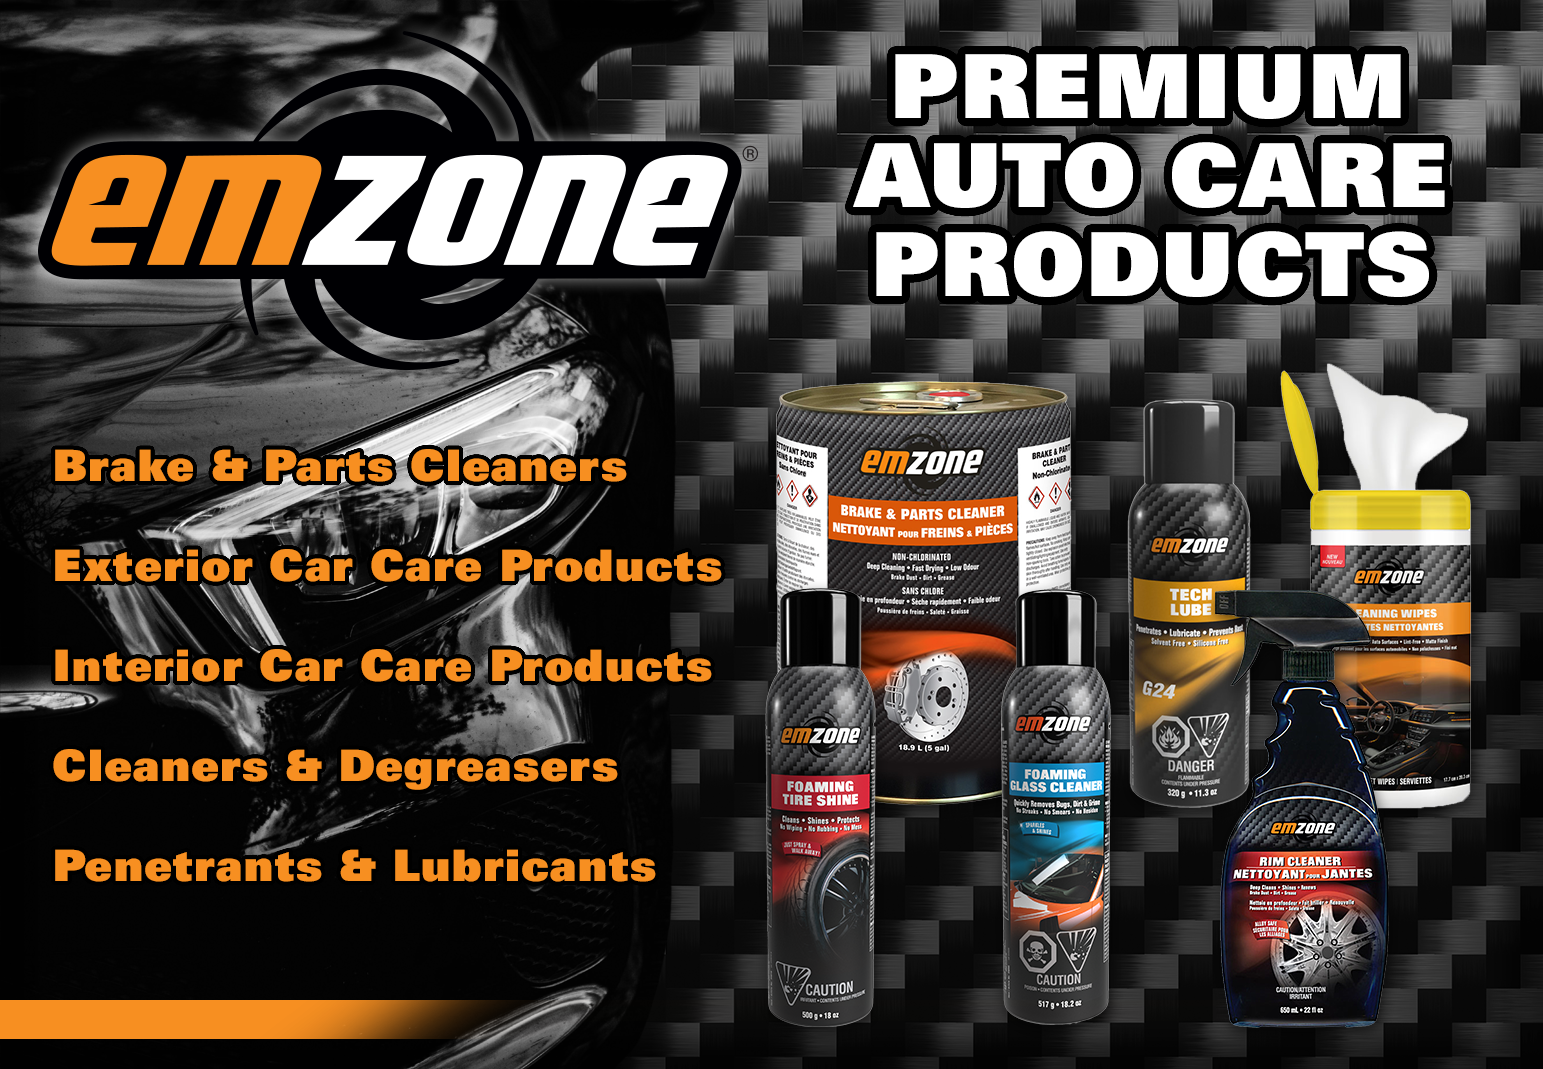 Emzone Premium Auto Care Products